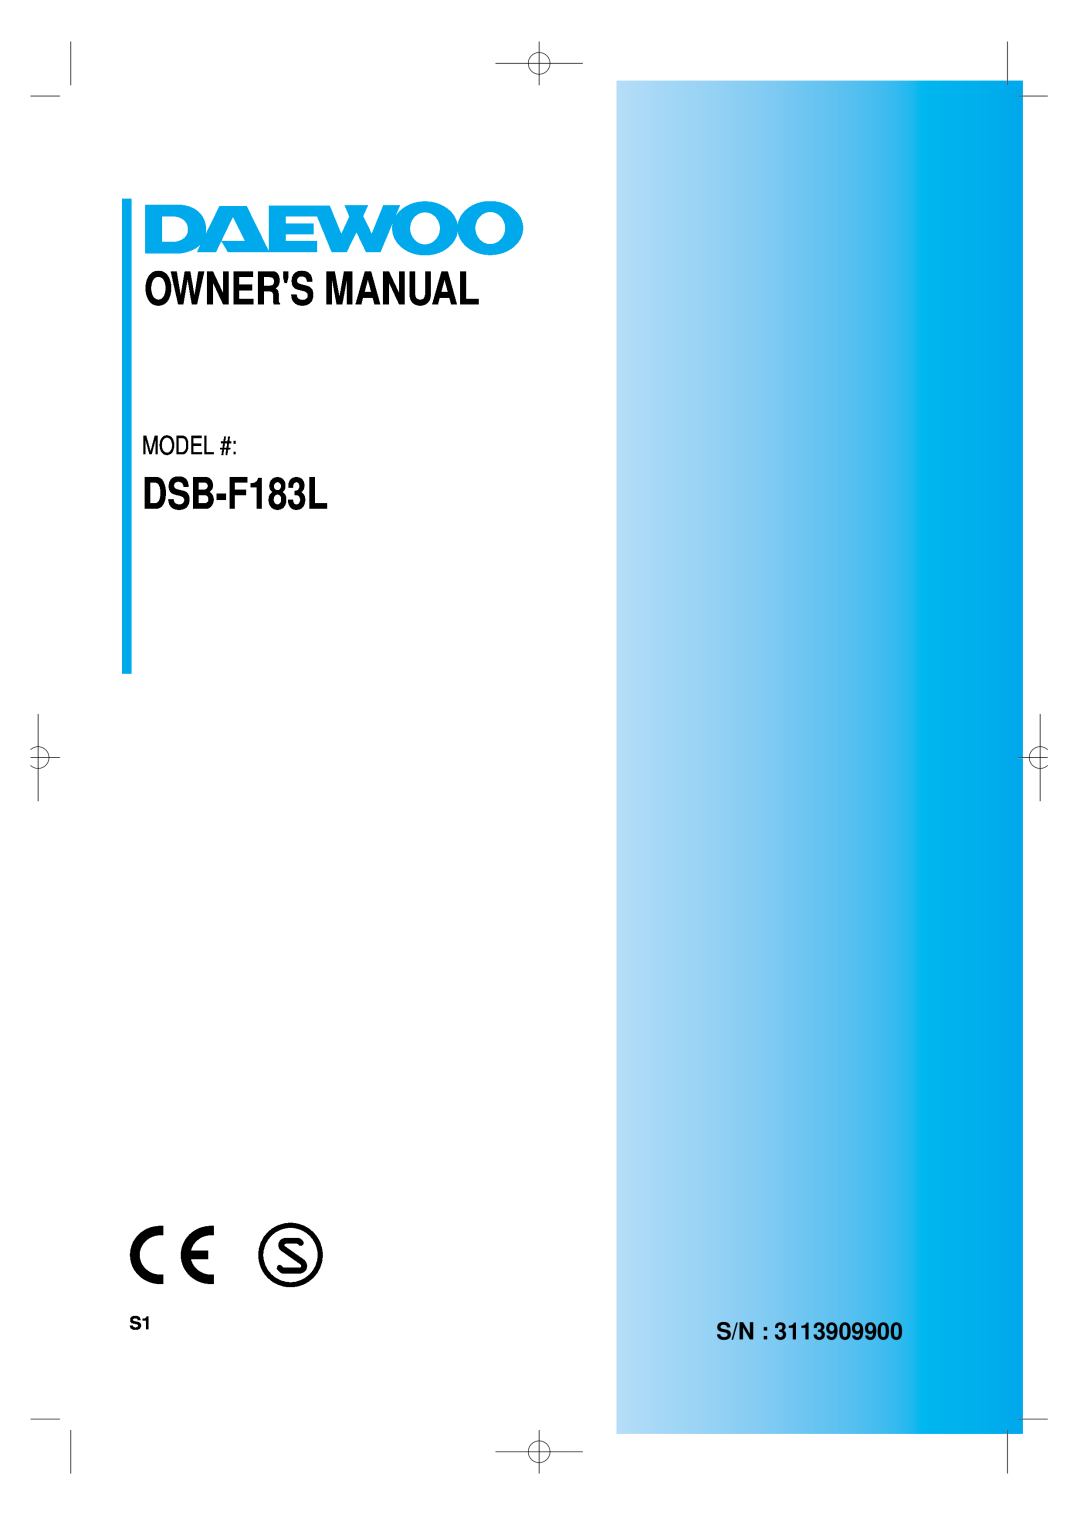 Daewoo DSB-F183L owner manual Model #, S/N 